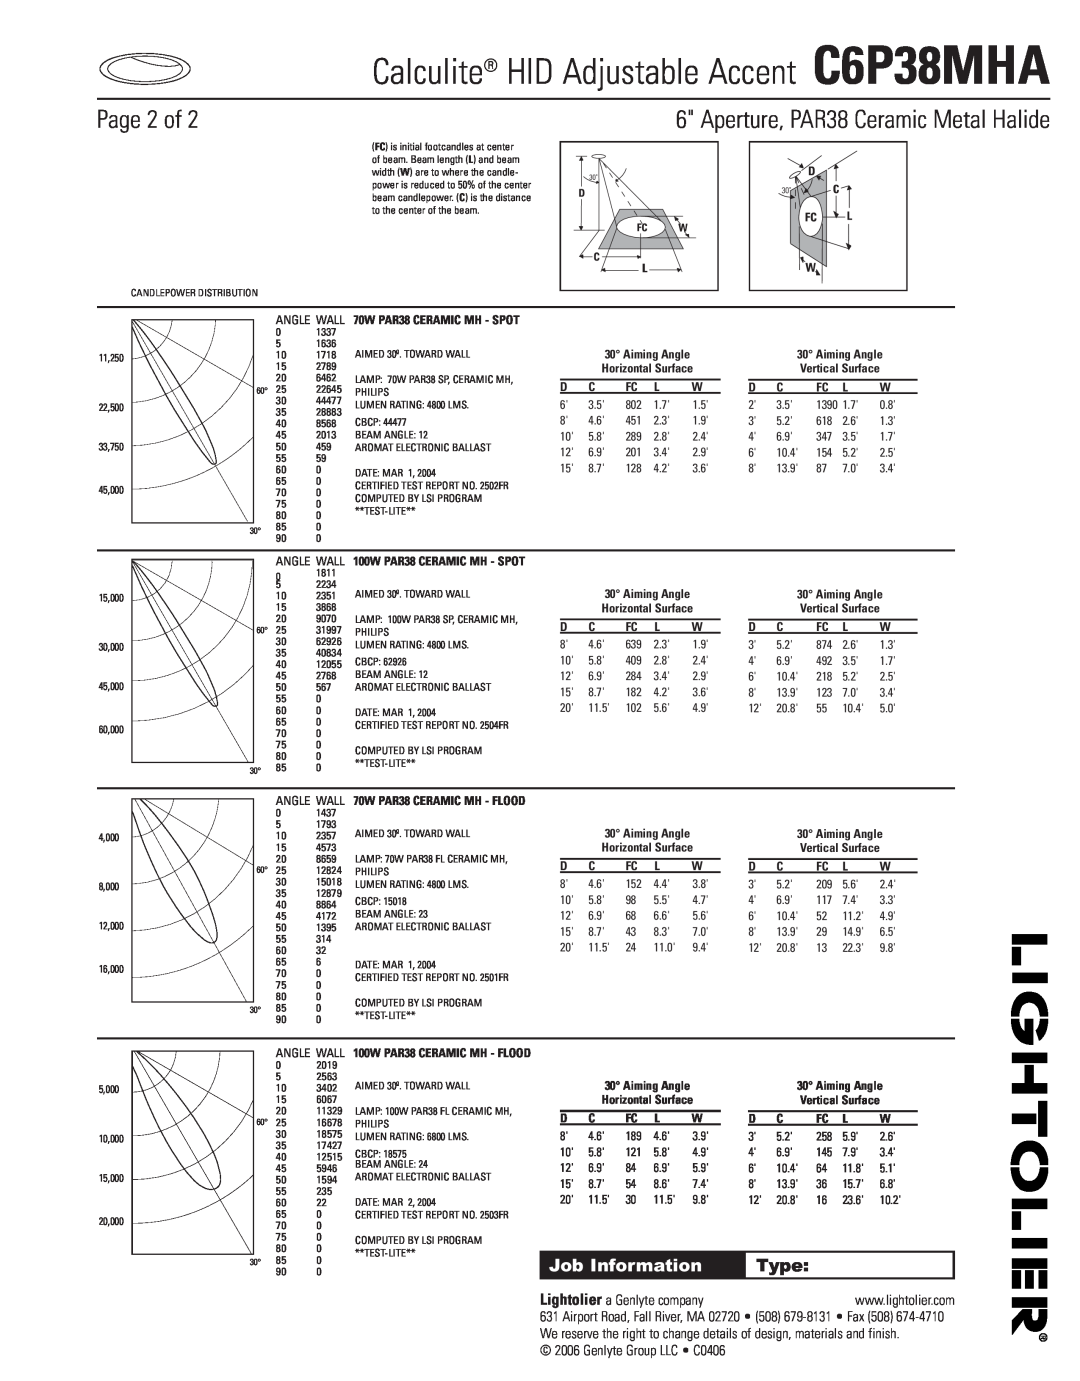 Lightolier Page 2 of, Calculite HID Adjustable Accent C6P38MHA, Aperture, PAR38 Ceramic Metal Halide, Job Information 